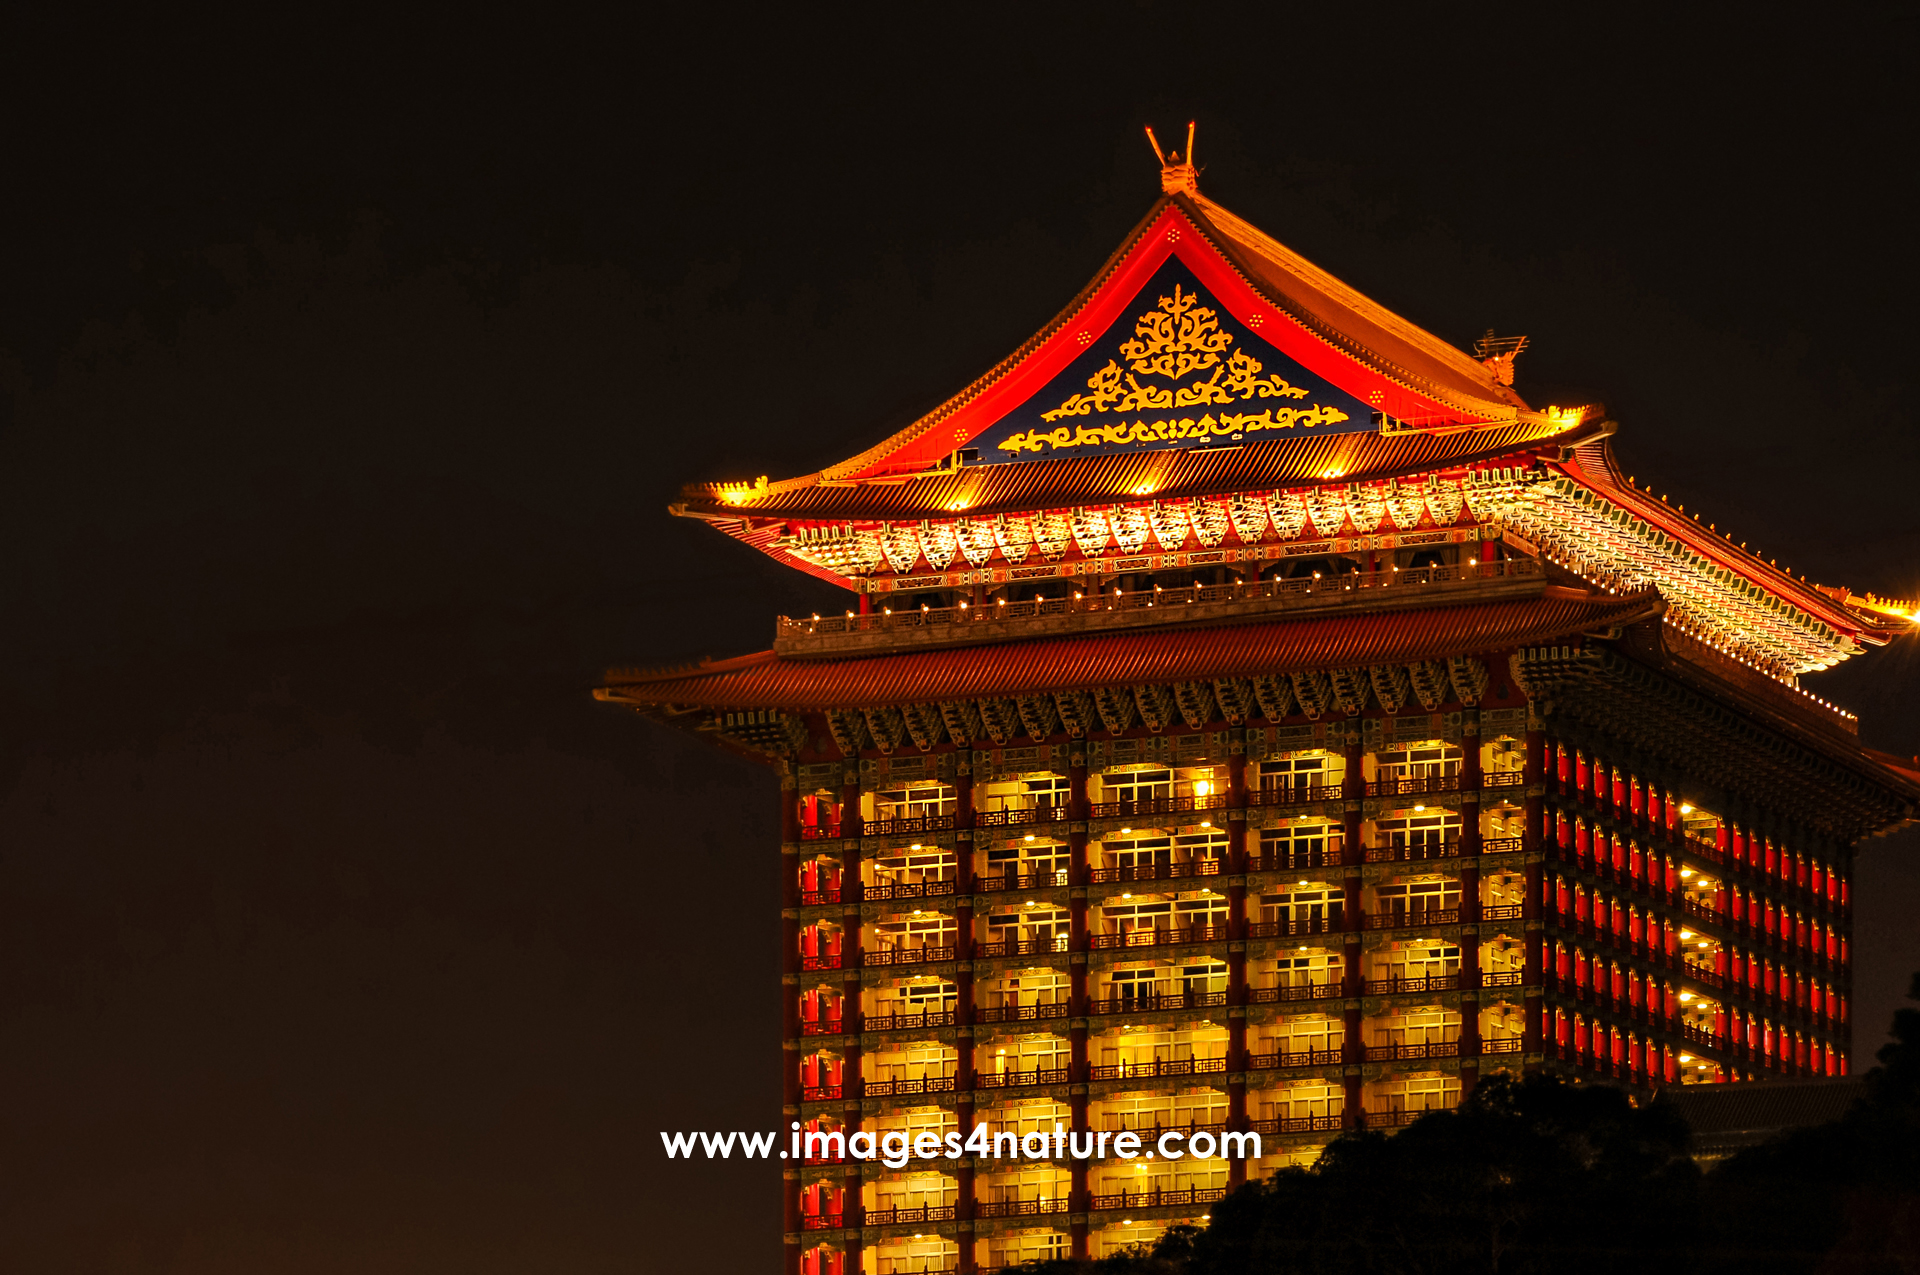 Taipei's Grand Hotel illuminated at night